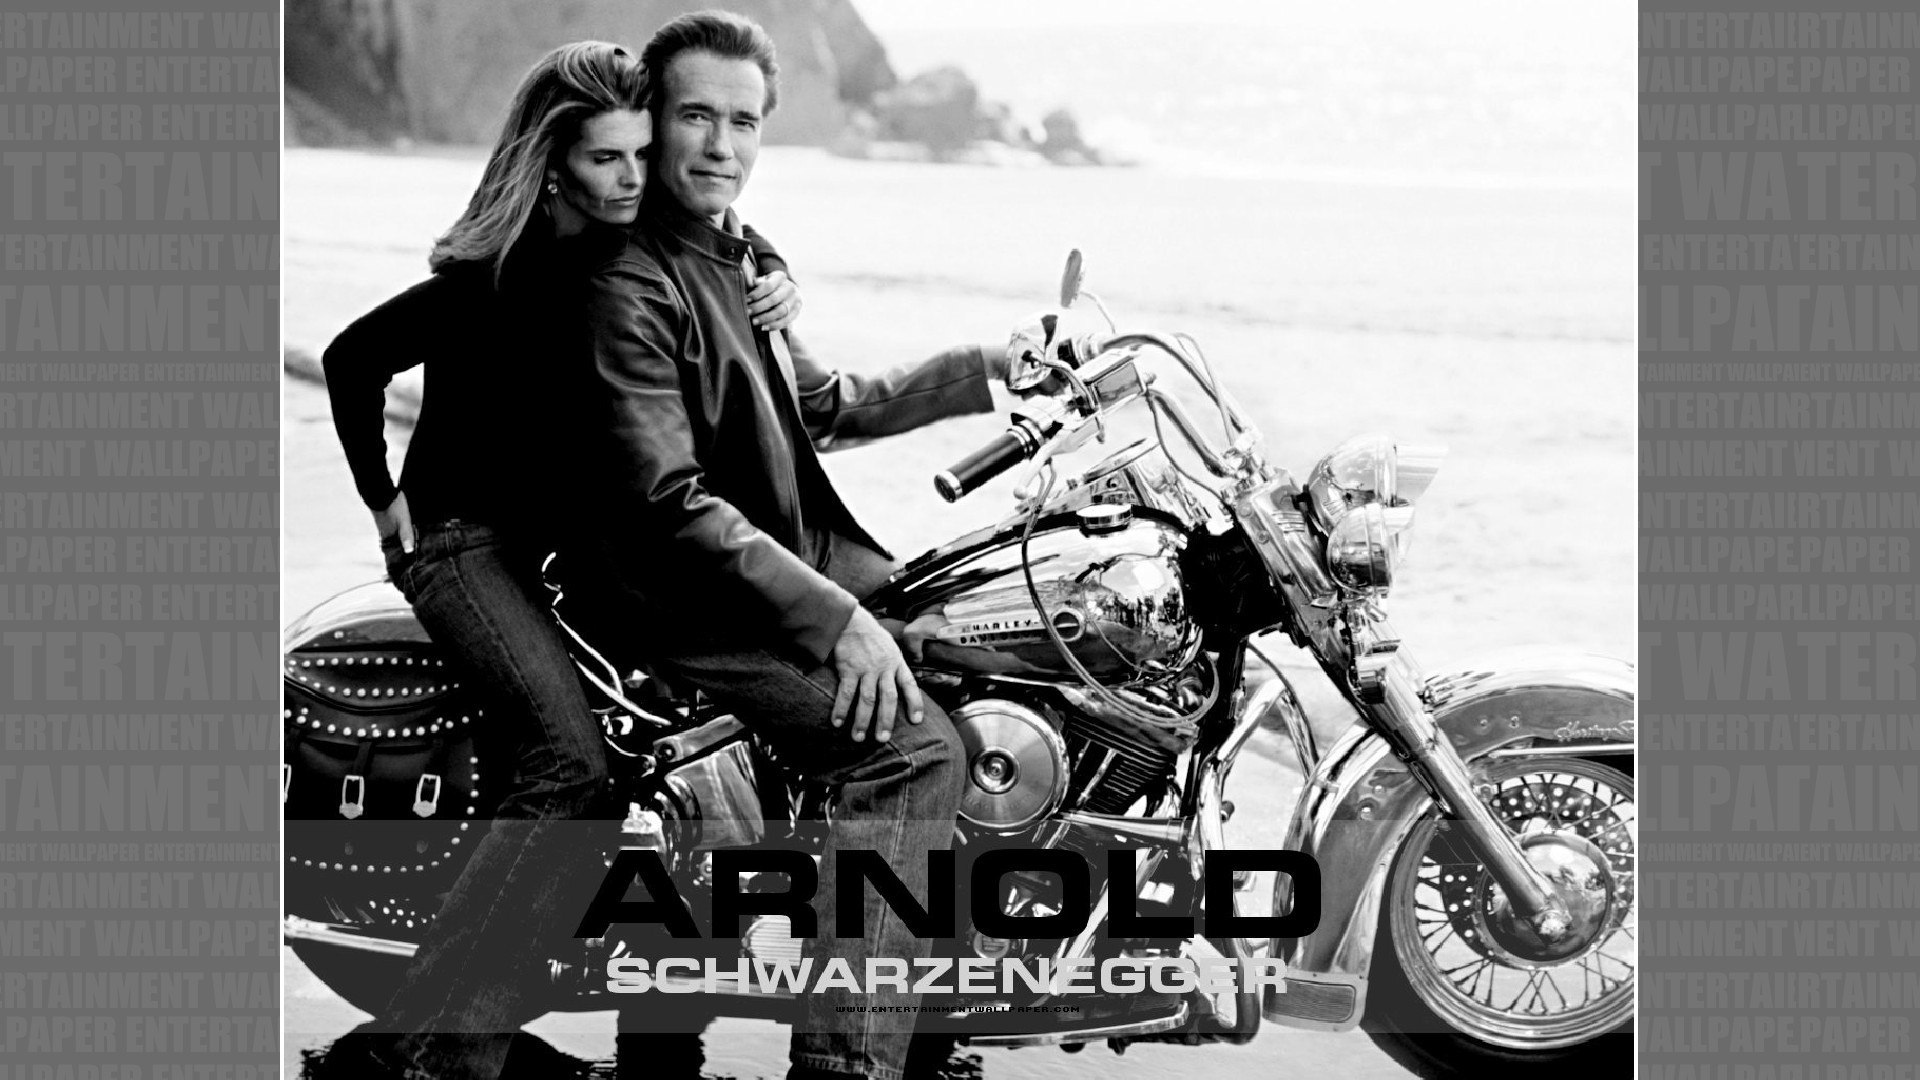 1920x1080 Arnold Schwarzenegger Wallpaper - Original size, download now.